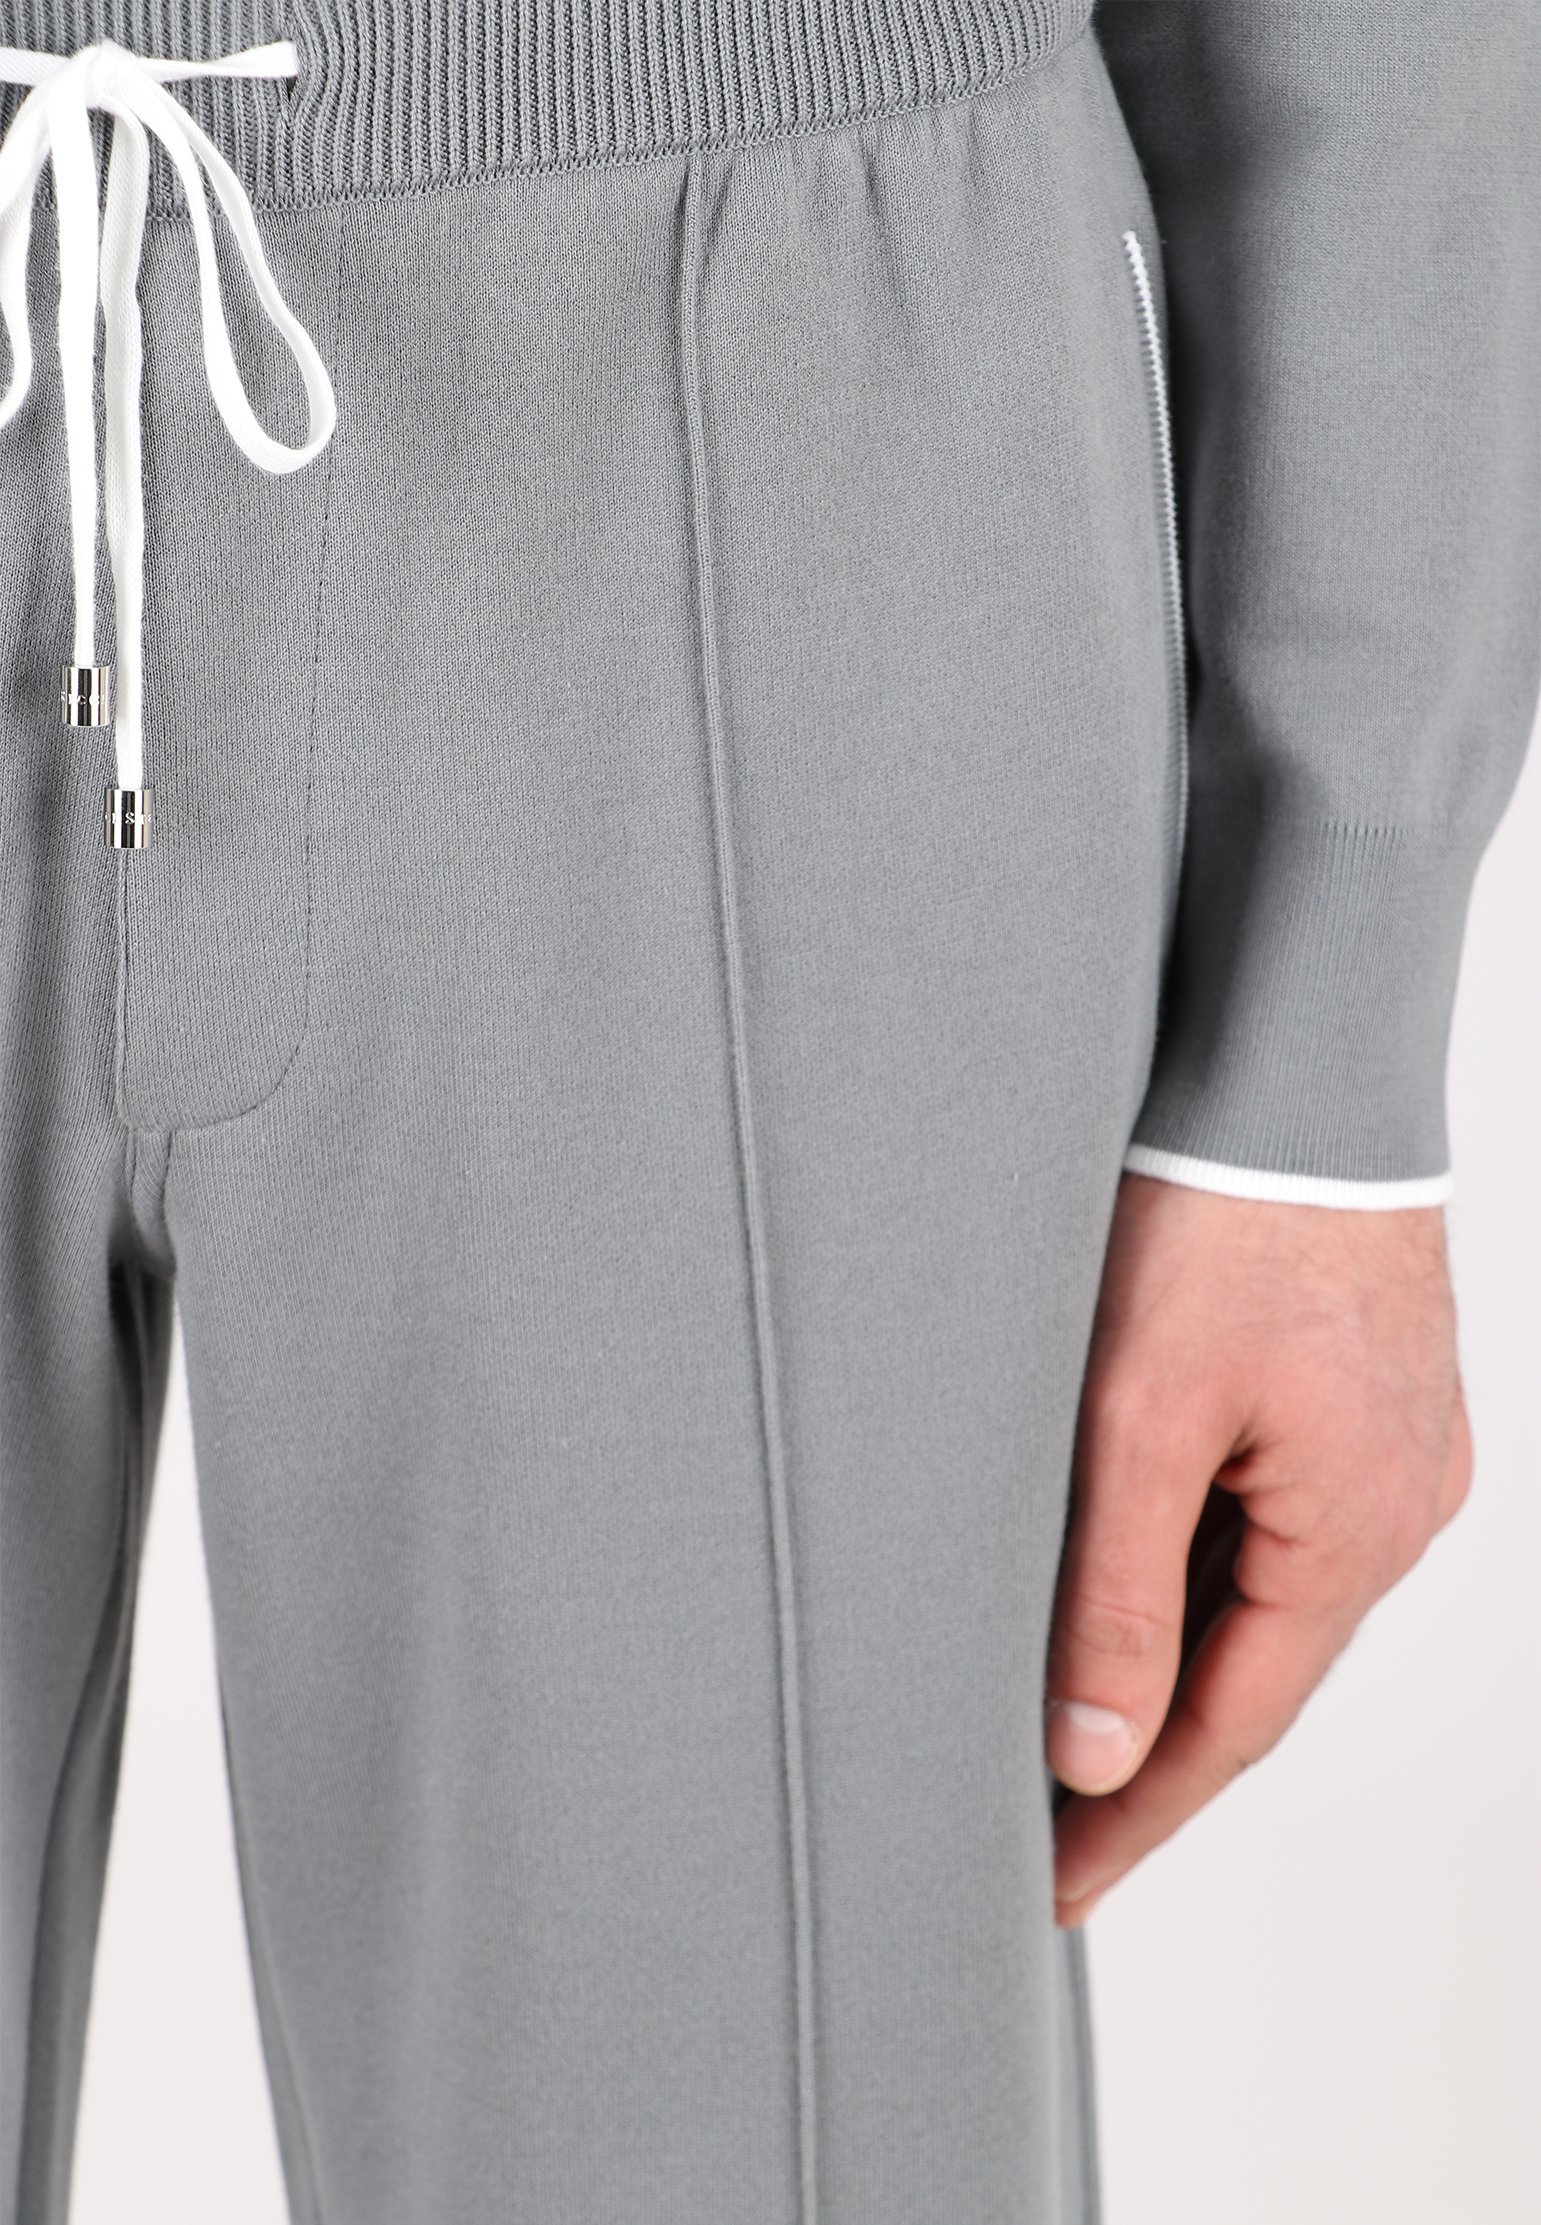 Jogging suit STEFANO RICCI Color: light grey (Code: 326) in online store Allure